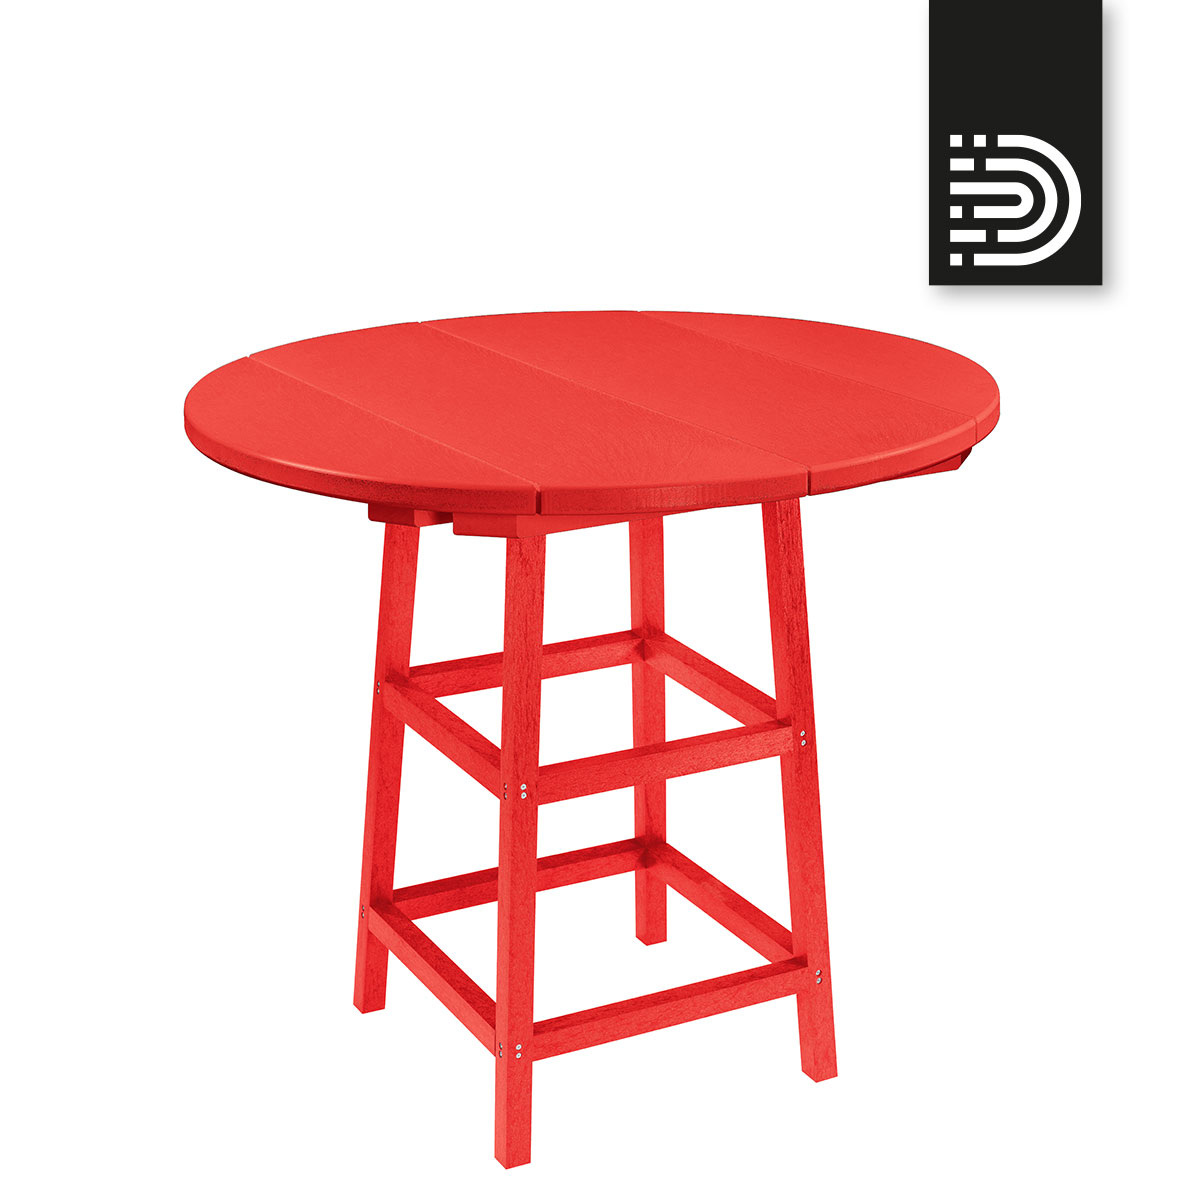 Pub Table in red 01 - TB03+TT03/04